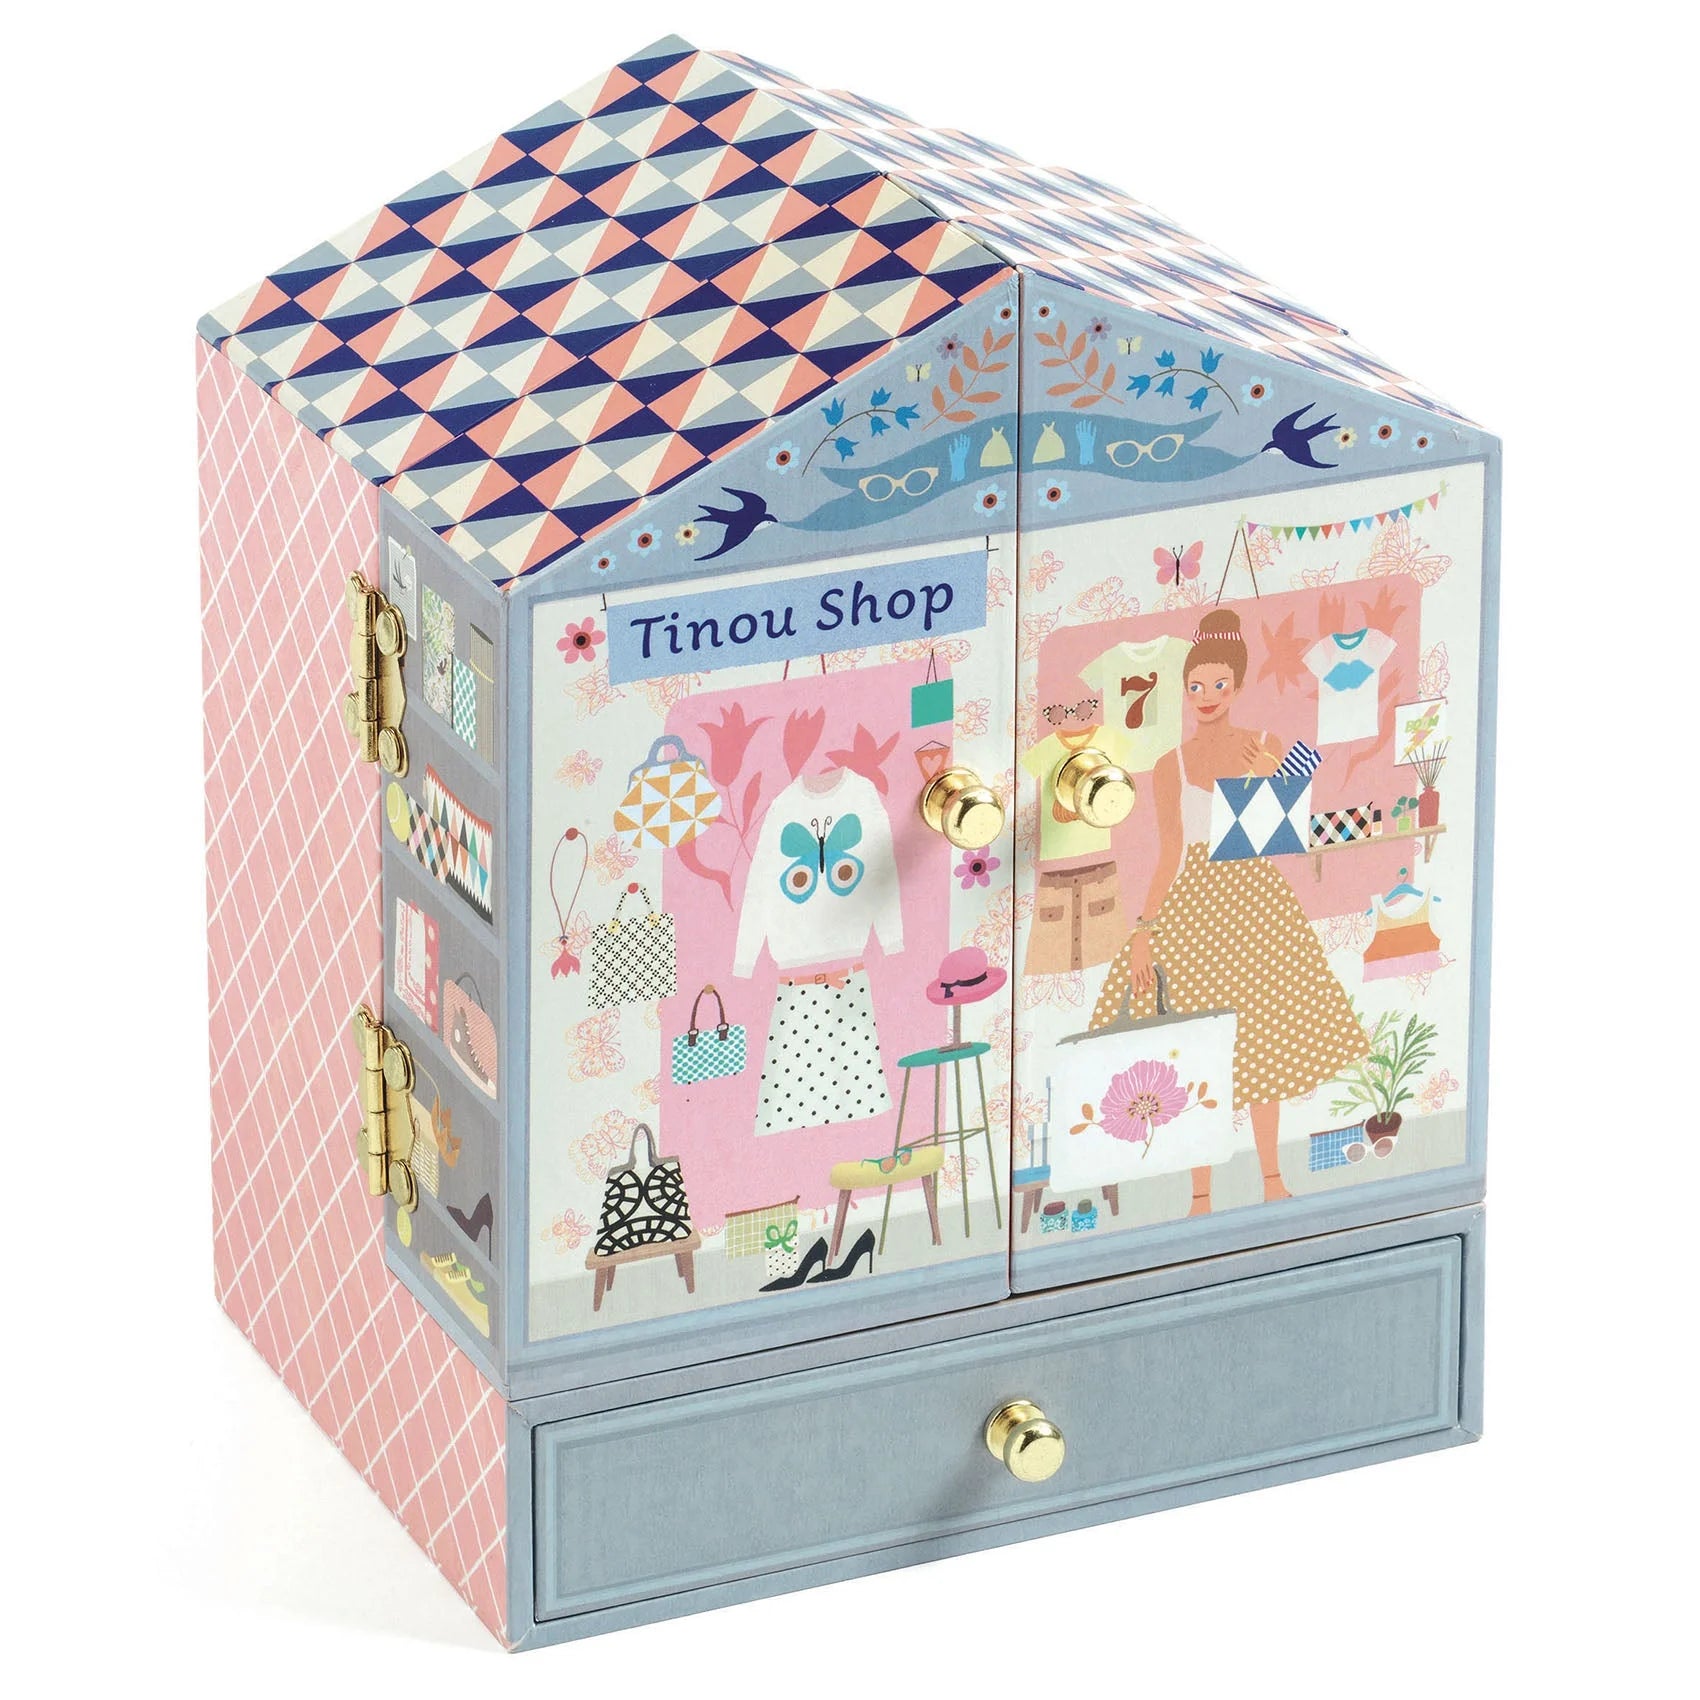 Tinou Shop Treasure Box